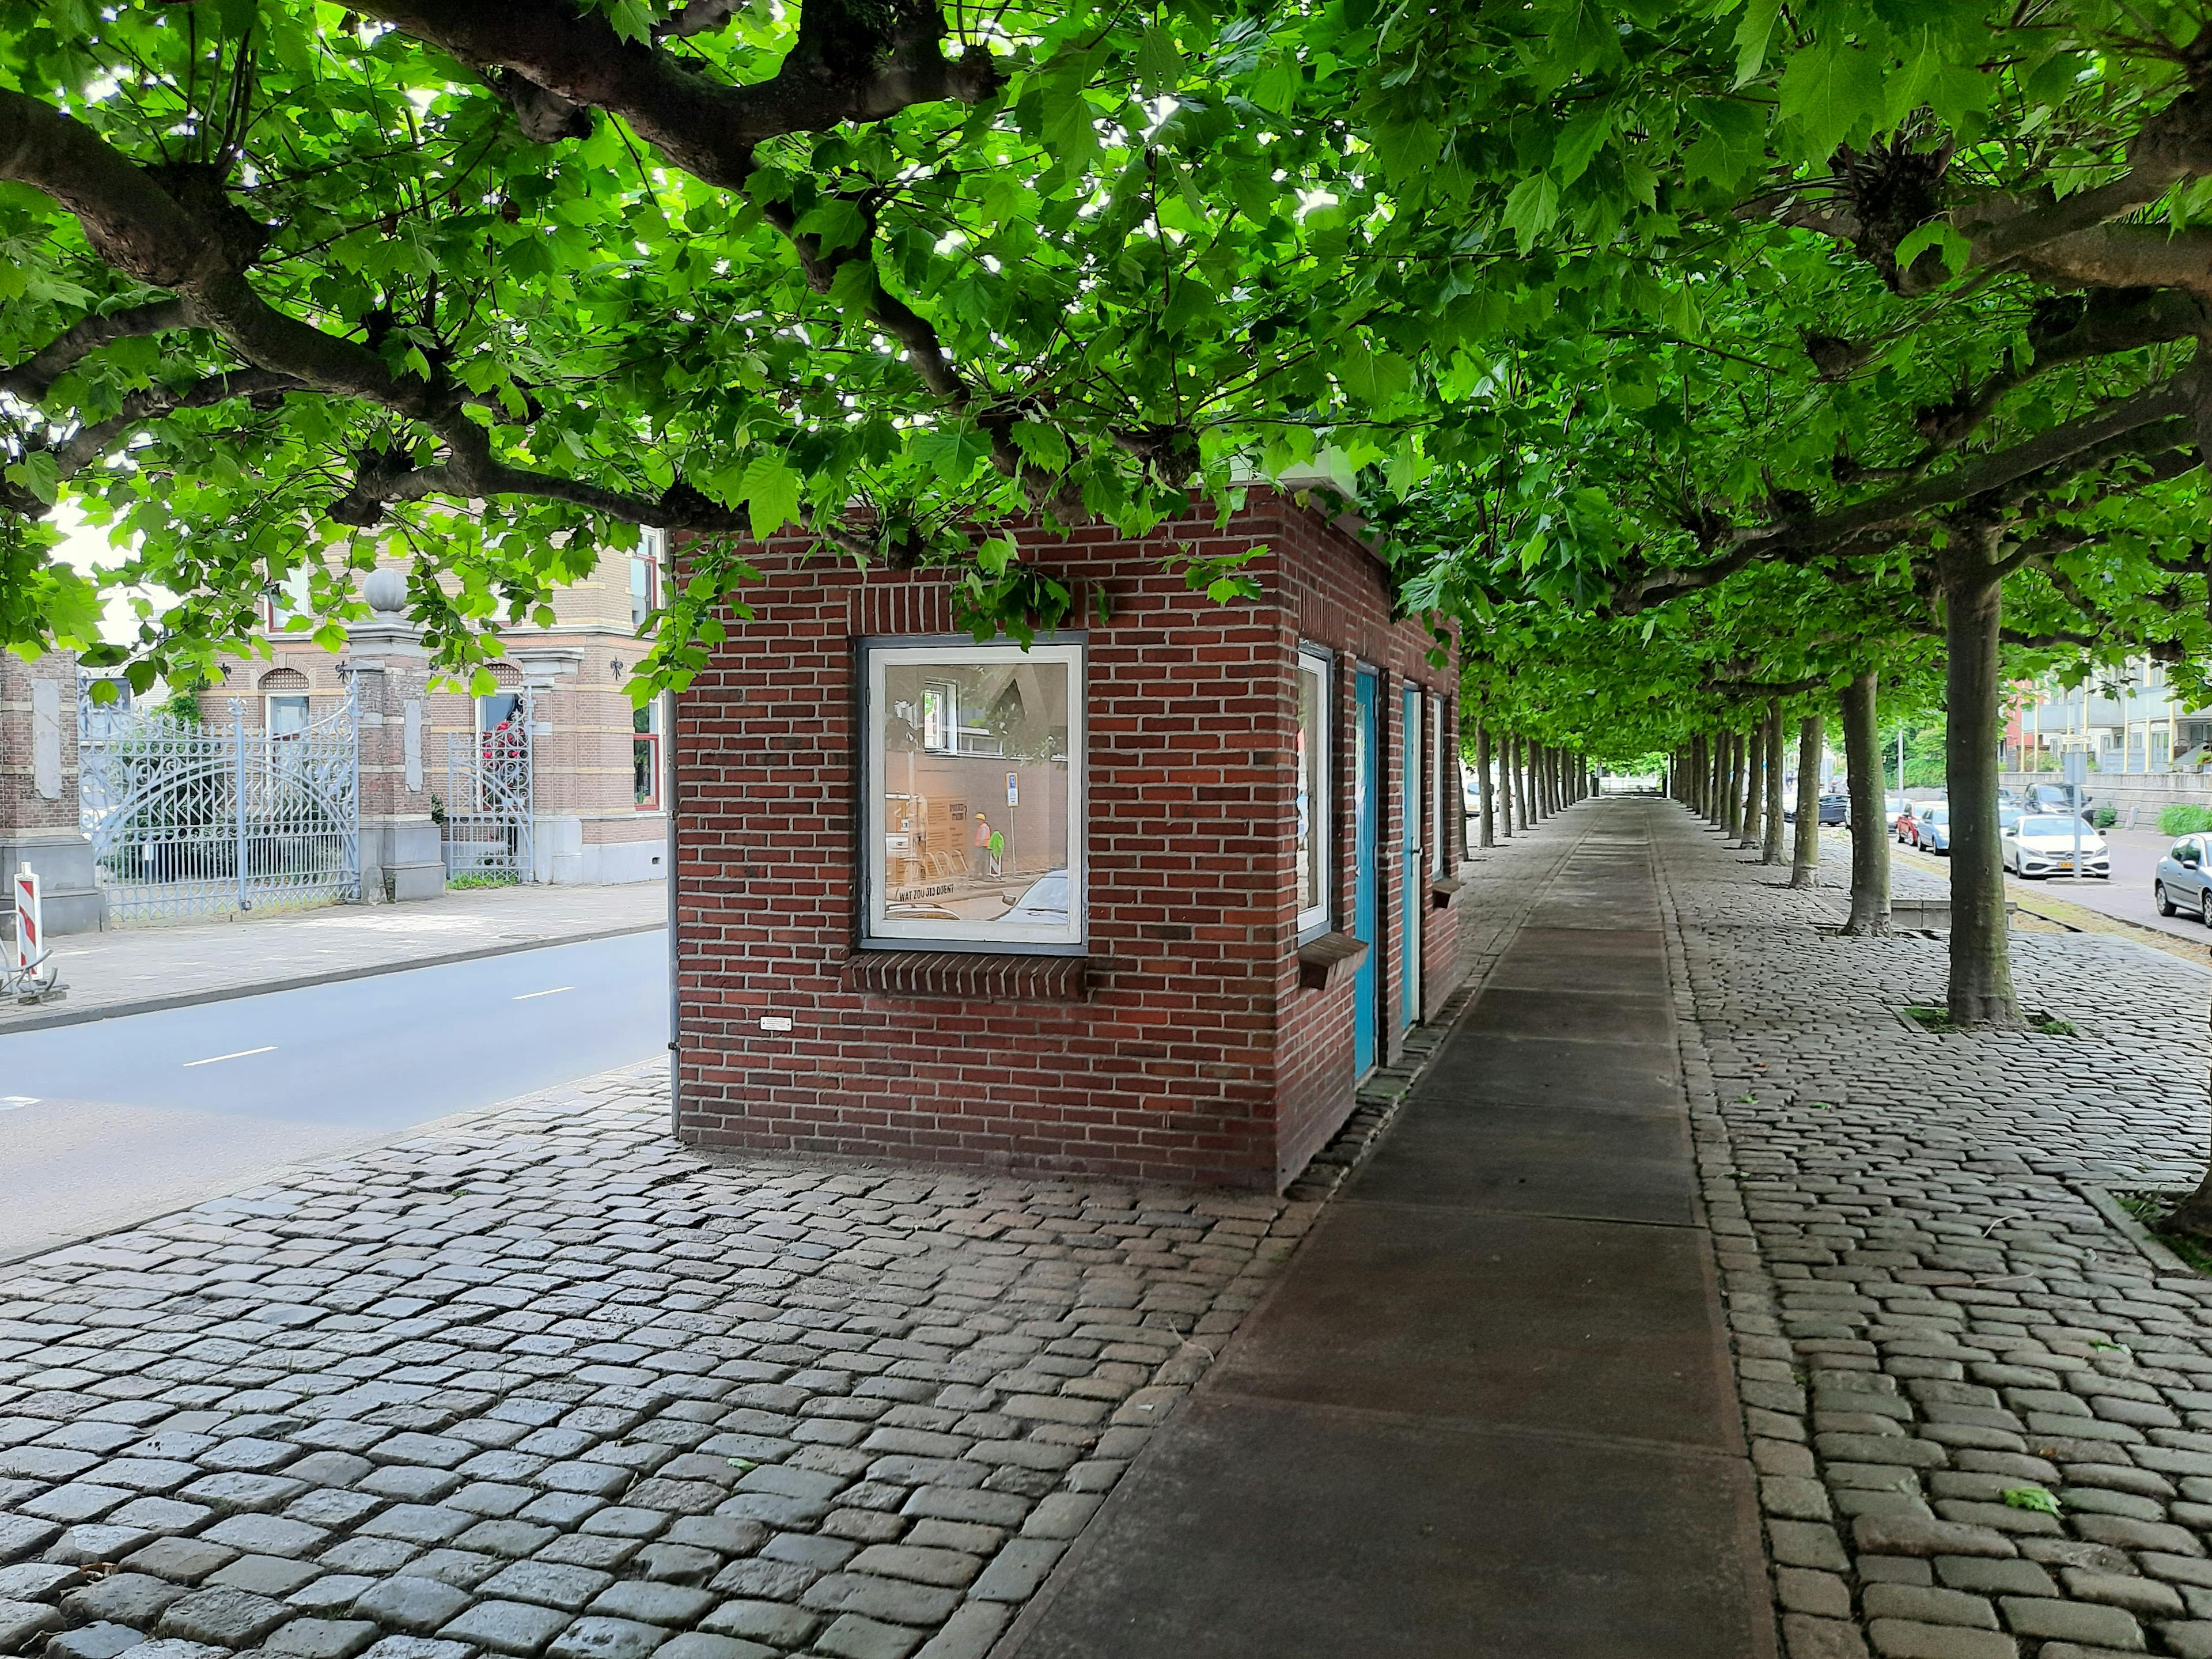 Museum Perron Oost